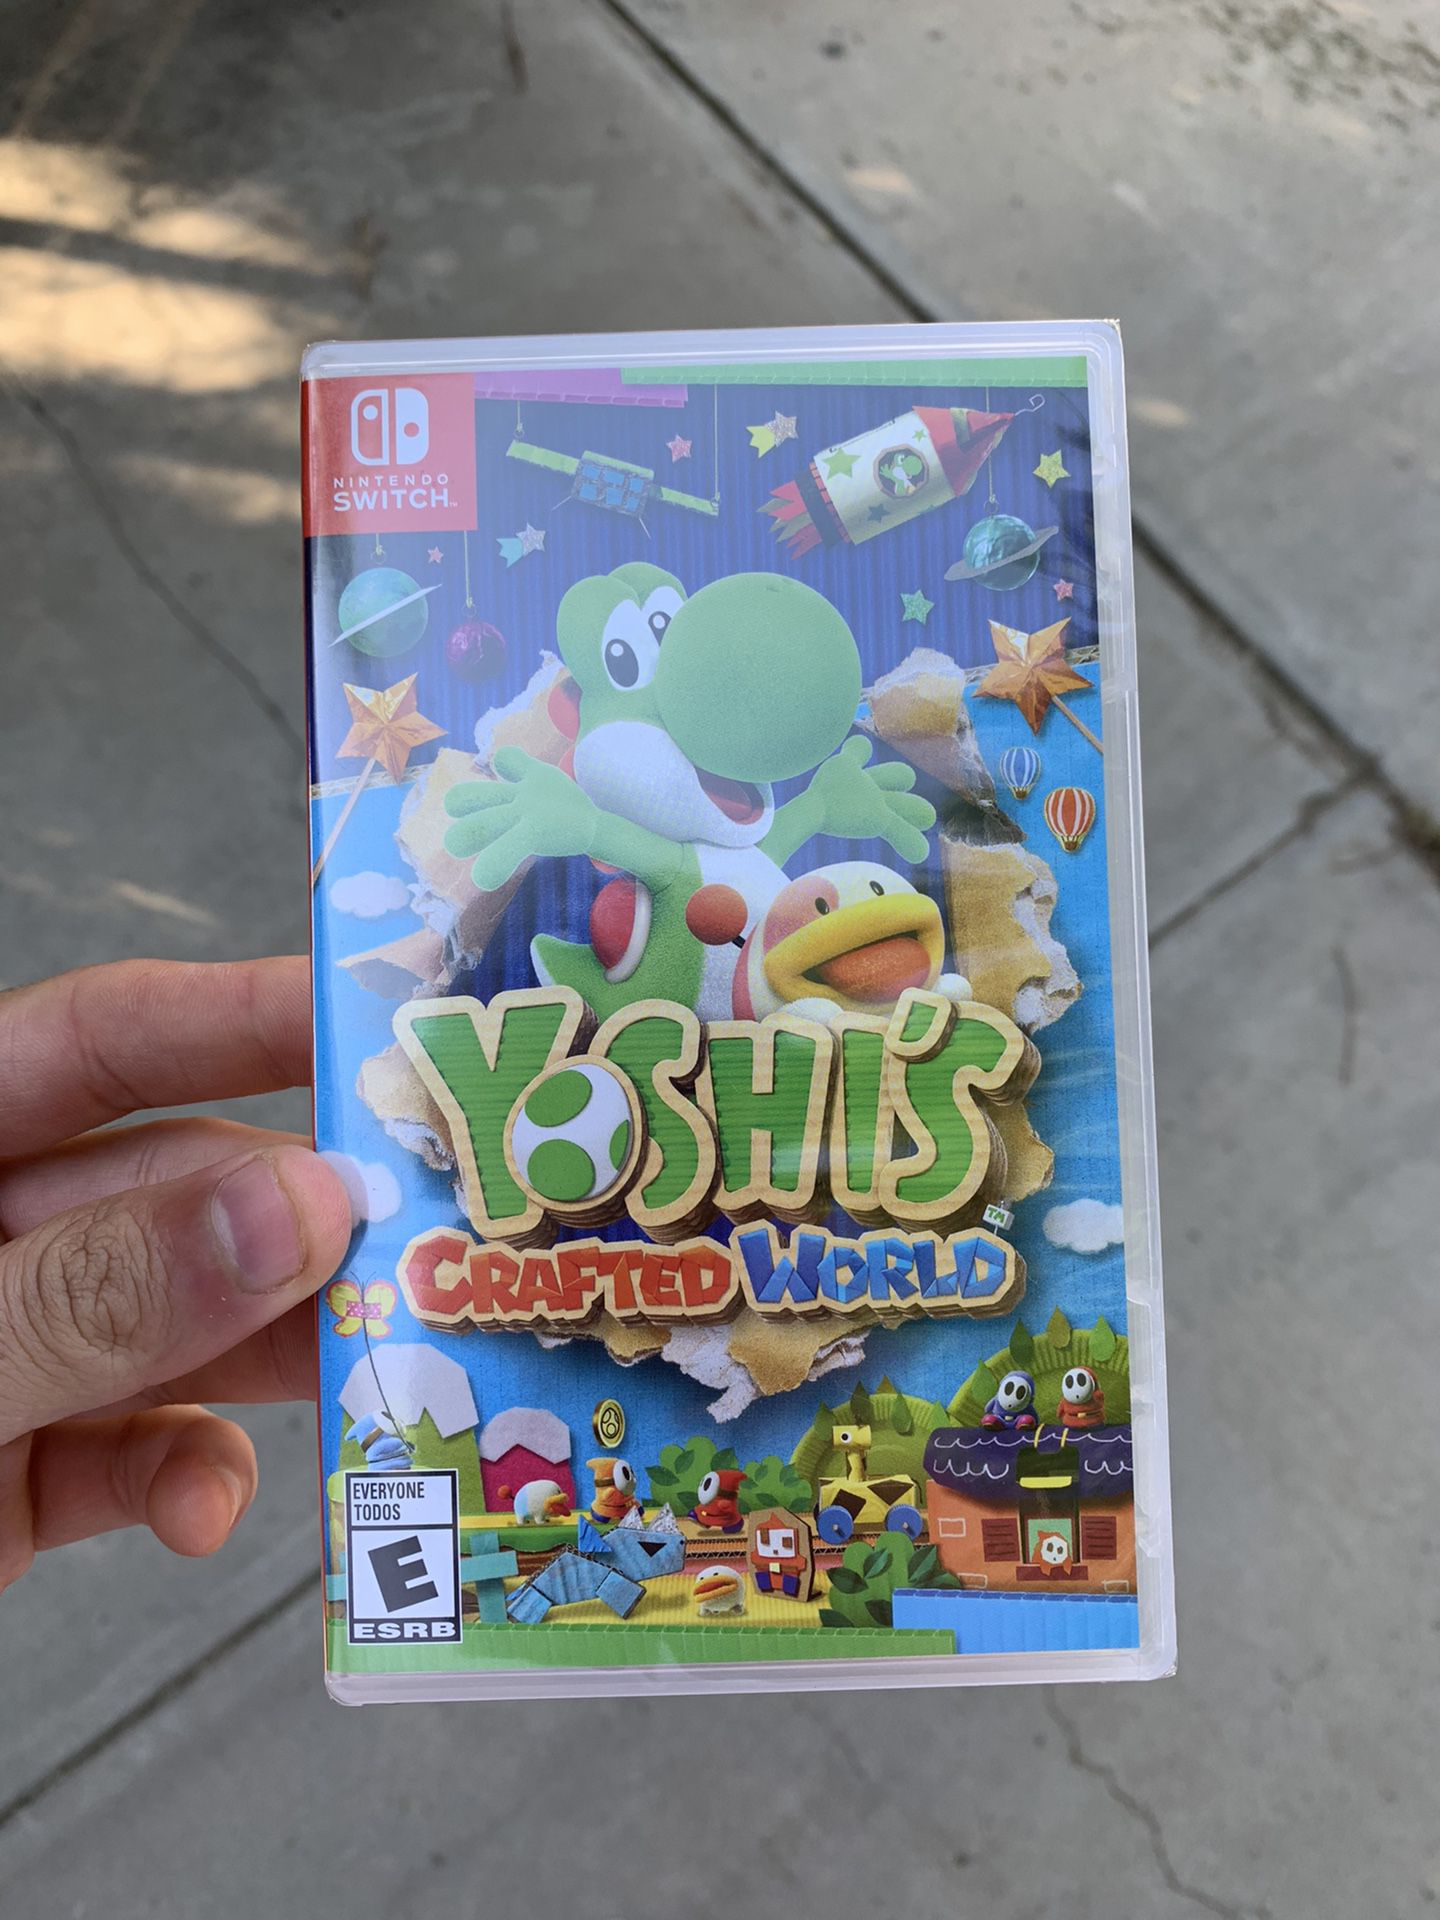 Yoshis crafted world (BrandNew) Nintendo Switch